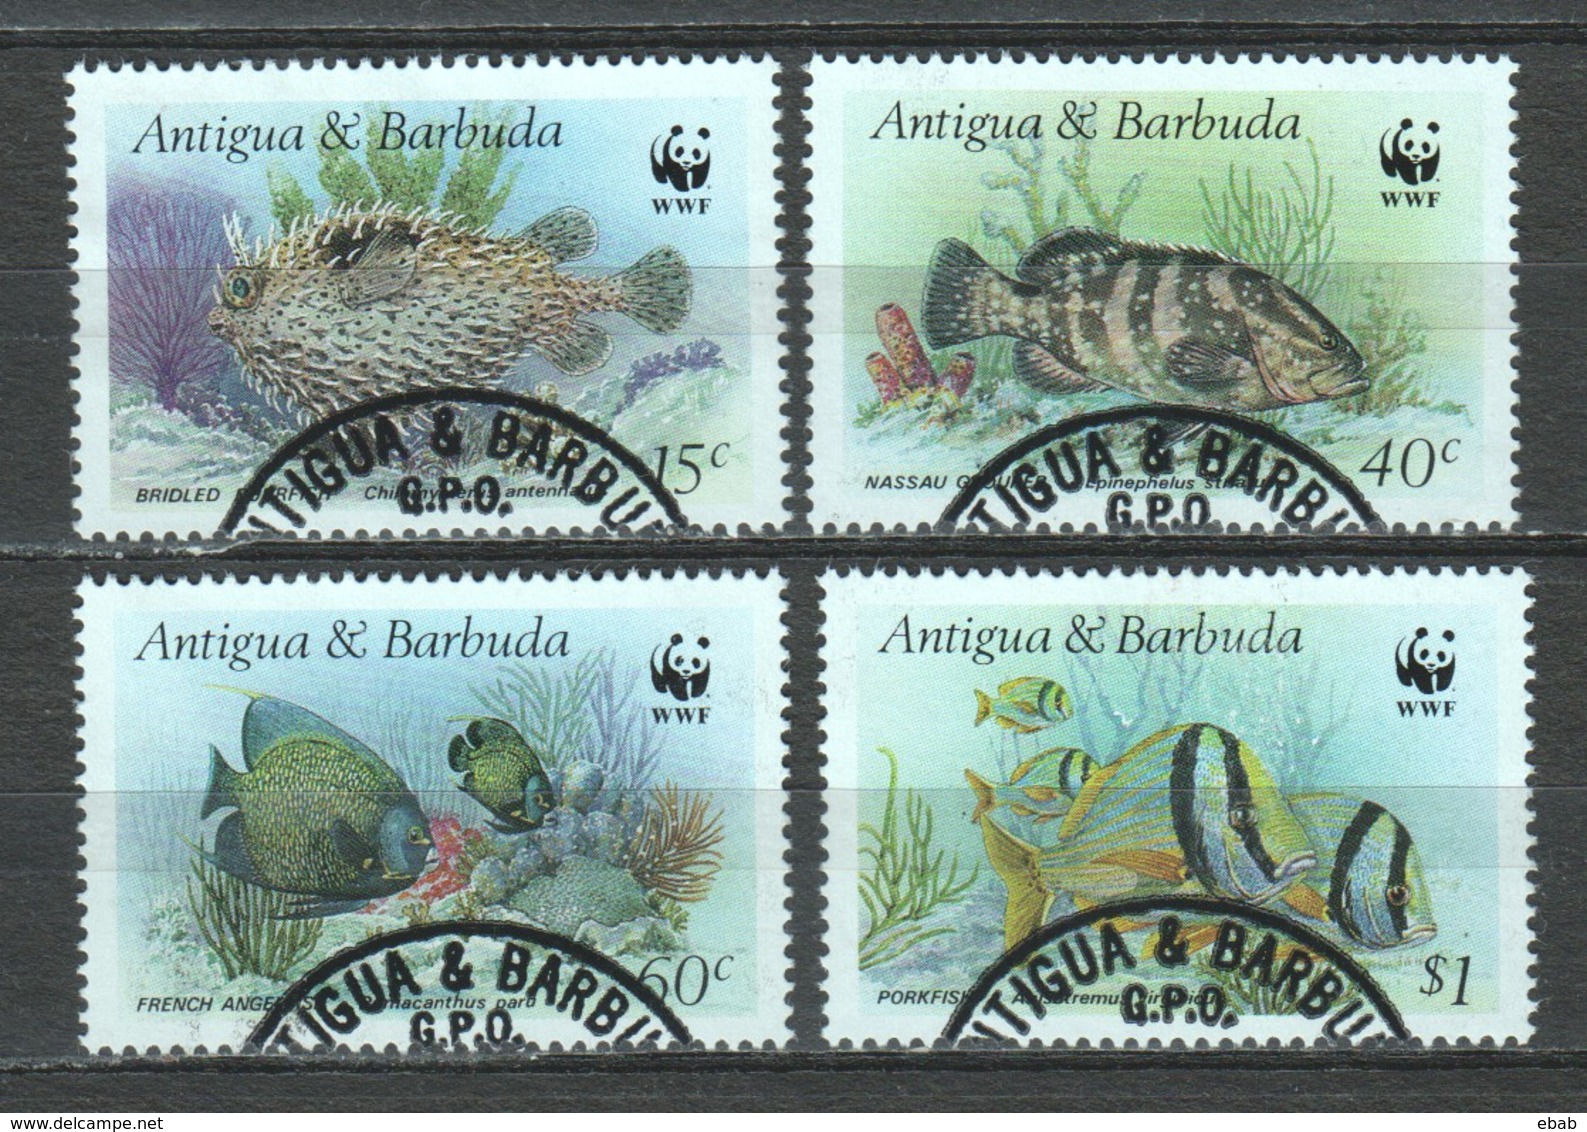 Antigua & Barbuda 1987 Mi 1010-1013 WWF FISHES - Used Stamps